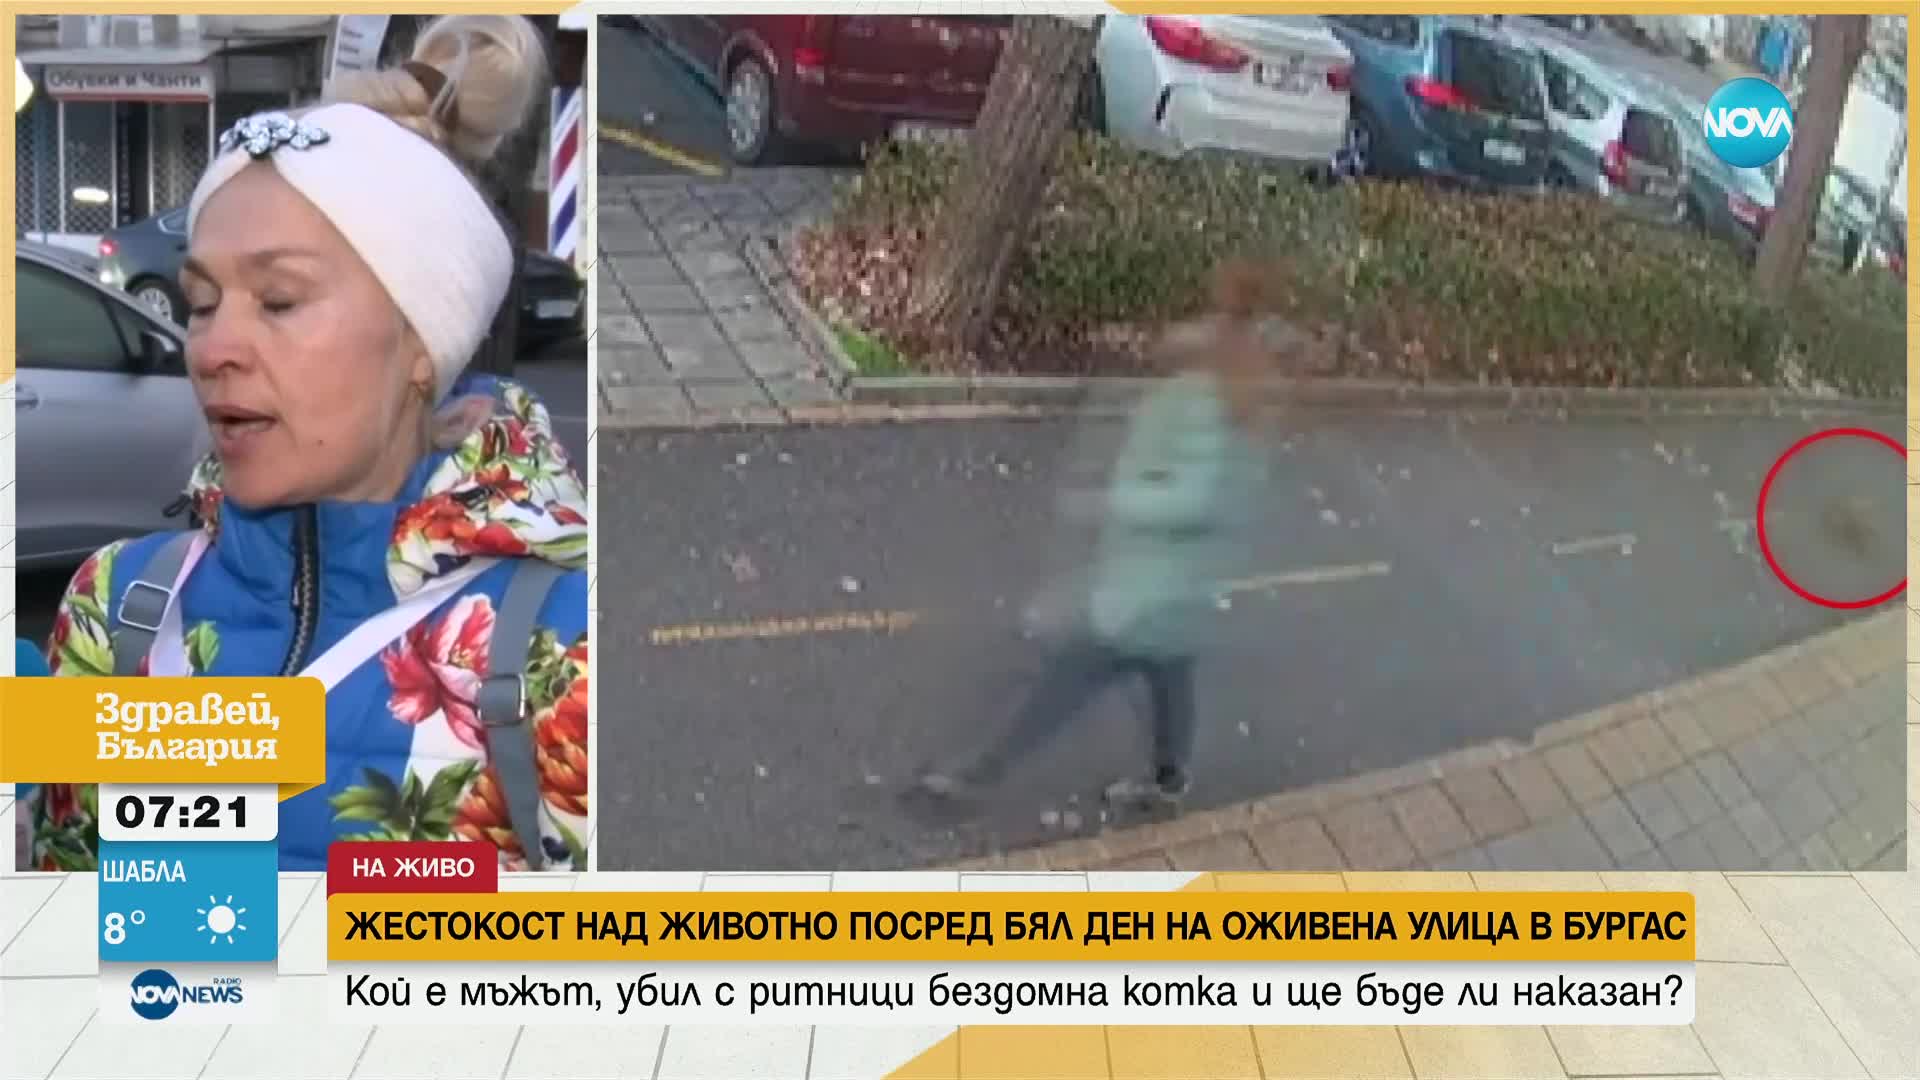 Мъж уби с ритници бездомна котка на оживена улица в Бургас